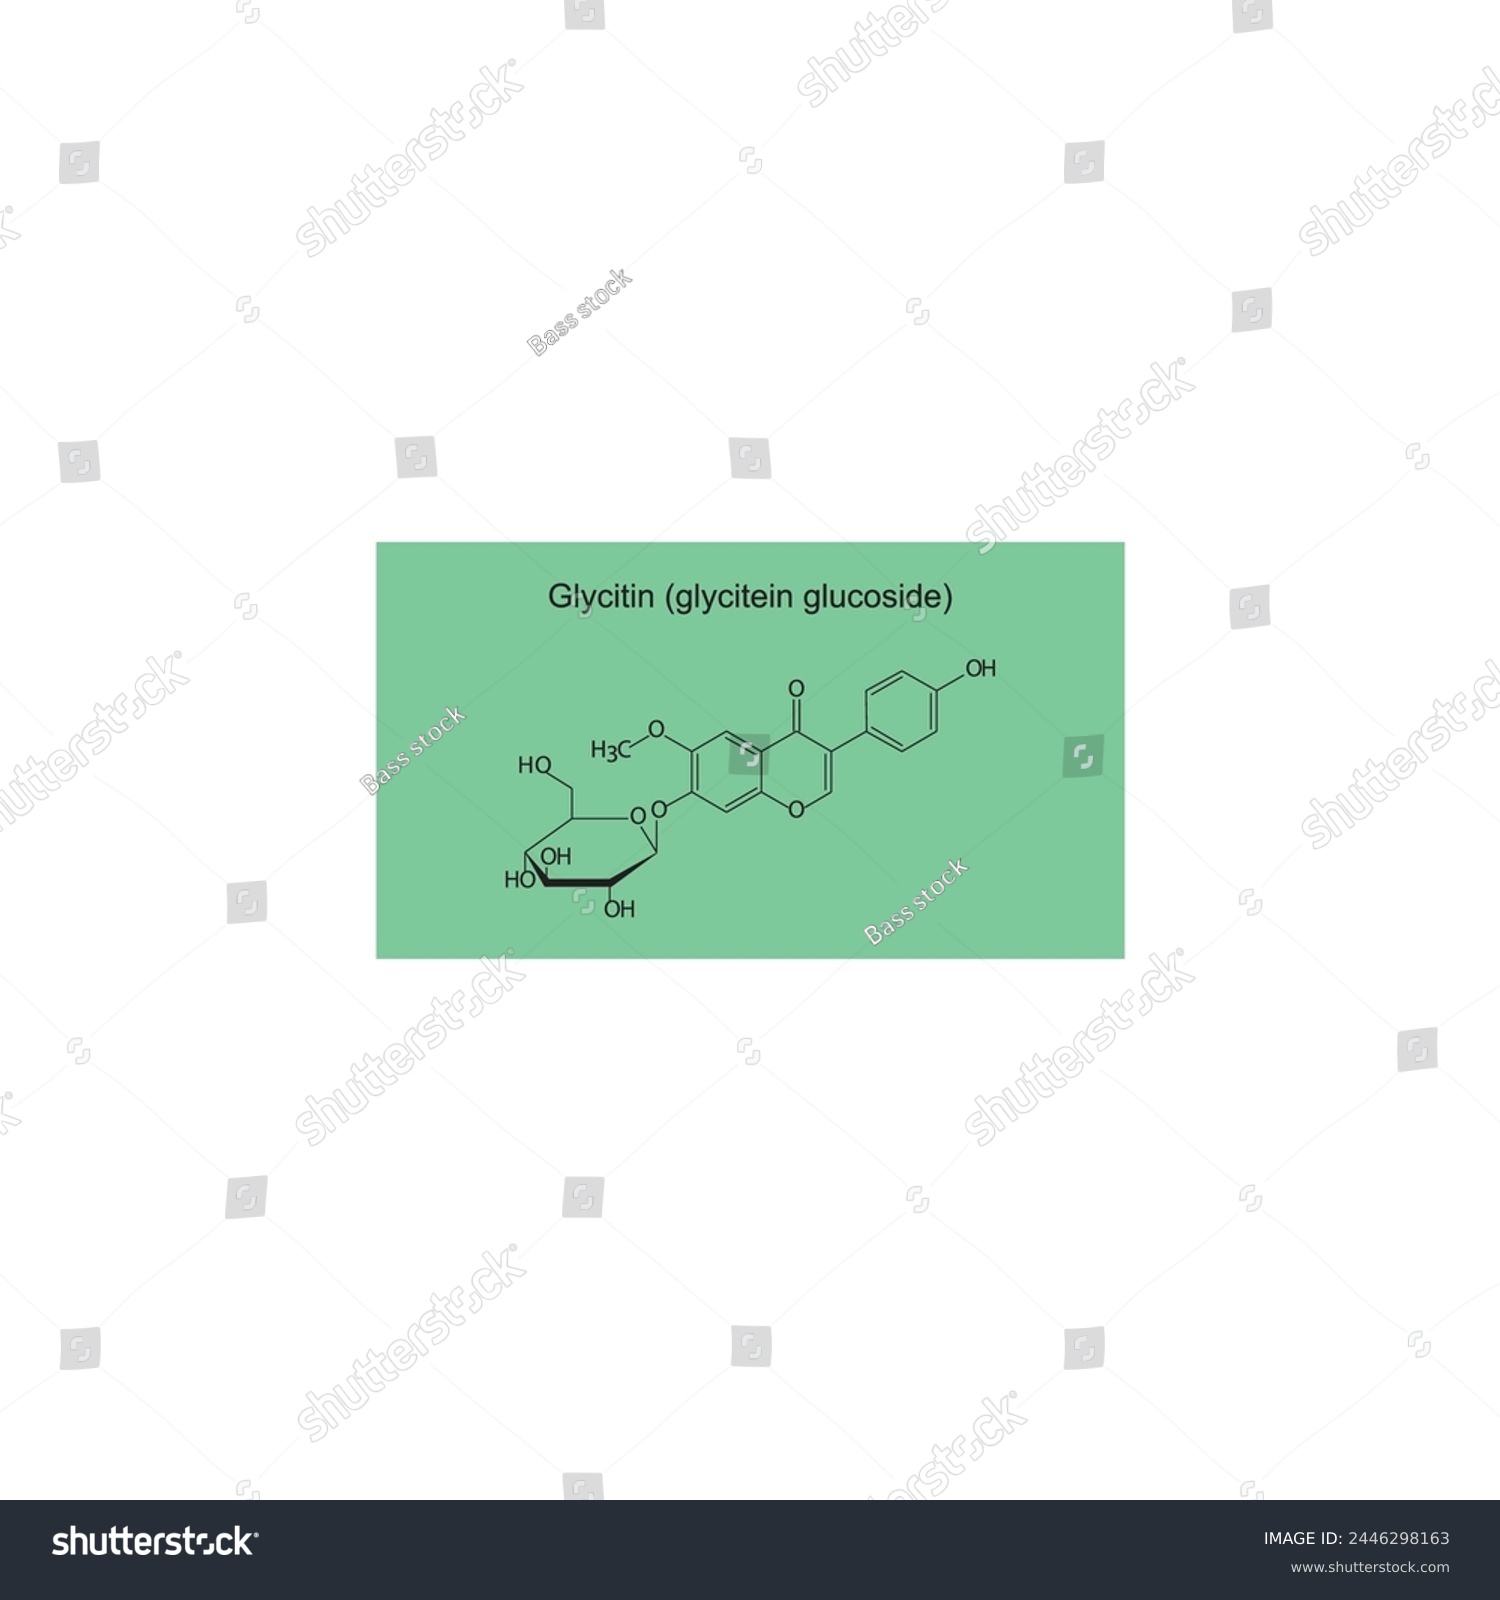 SVG of Glycitin (glycitein glucoside) skeletal structure diagram.Isoflavanone compound molecule scientific illustration on green background. svg